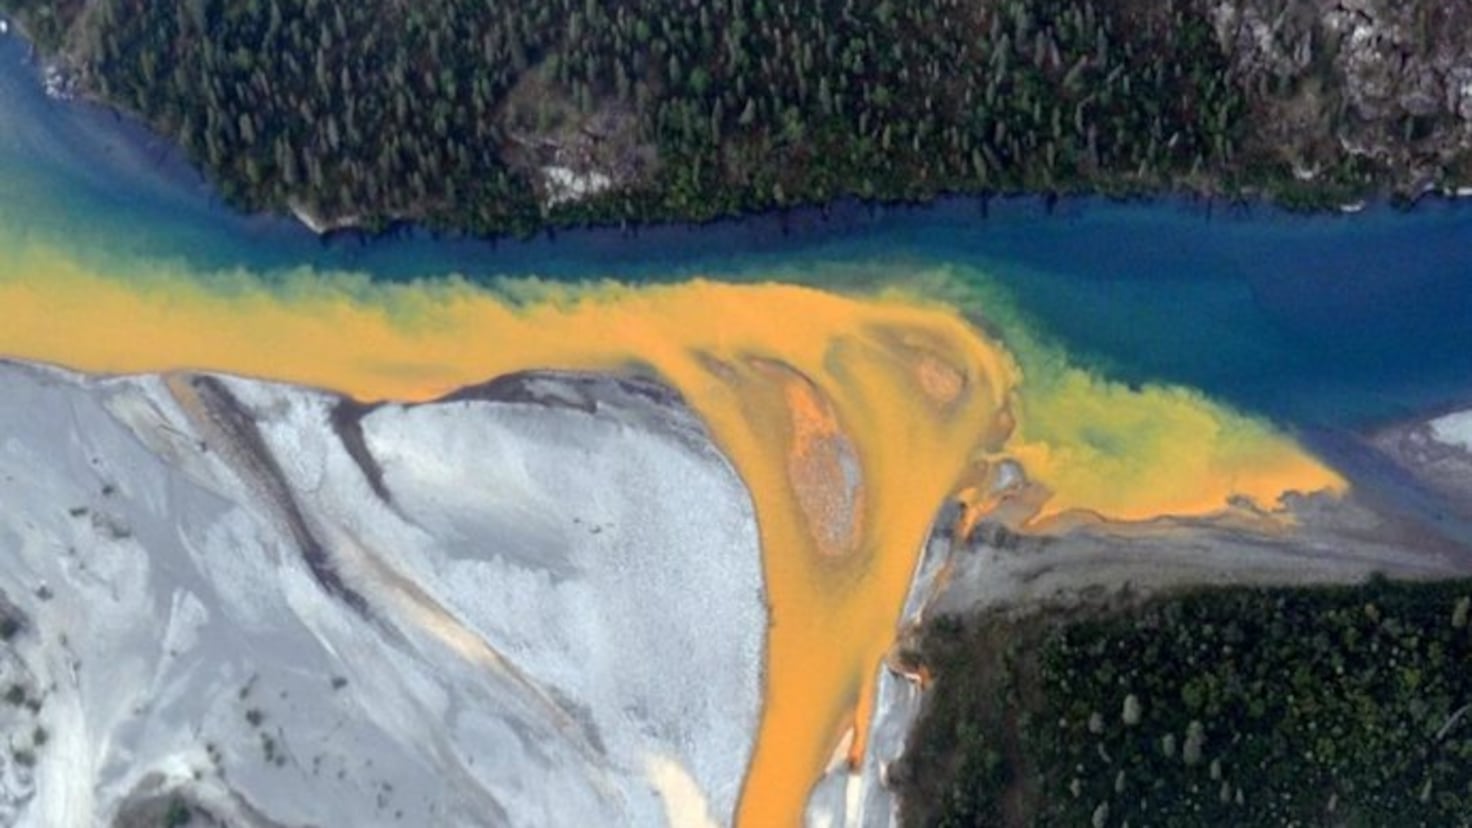 The reason Alaska's rivers have turned orange
